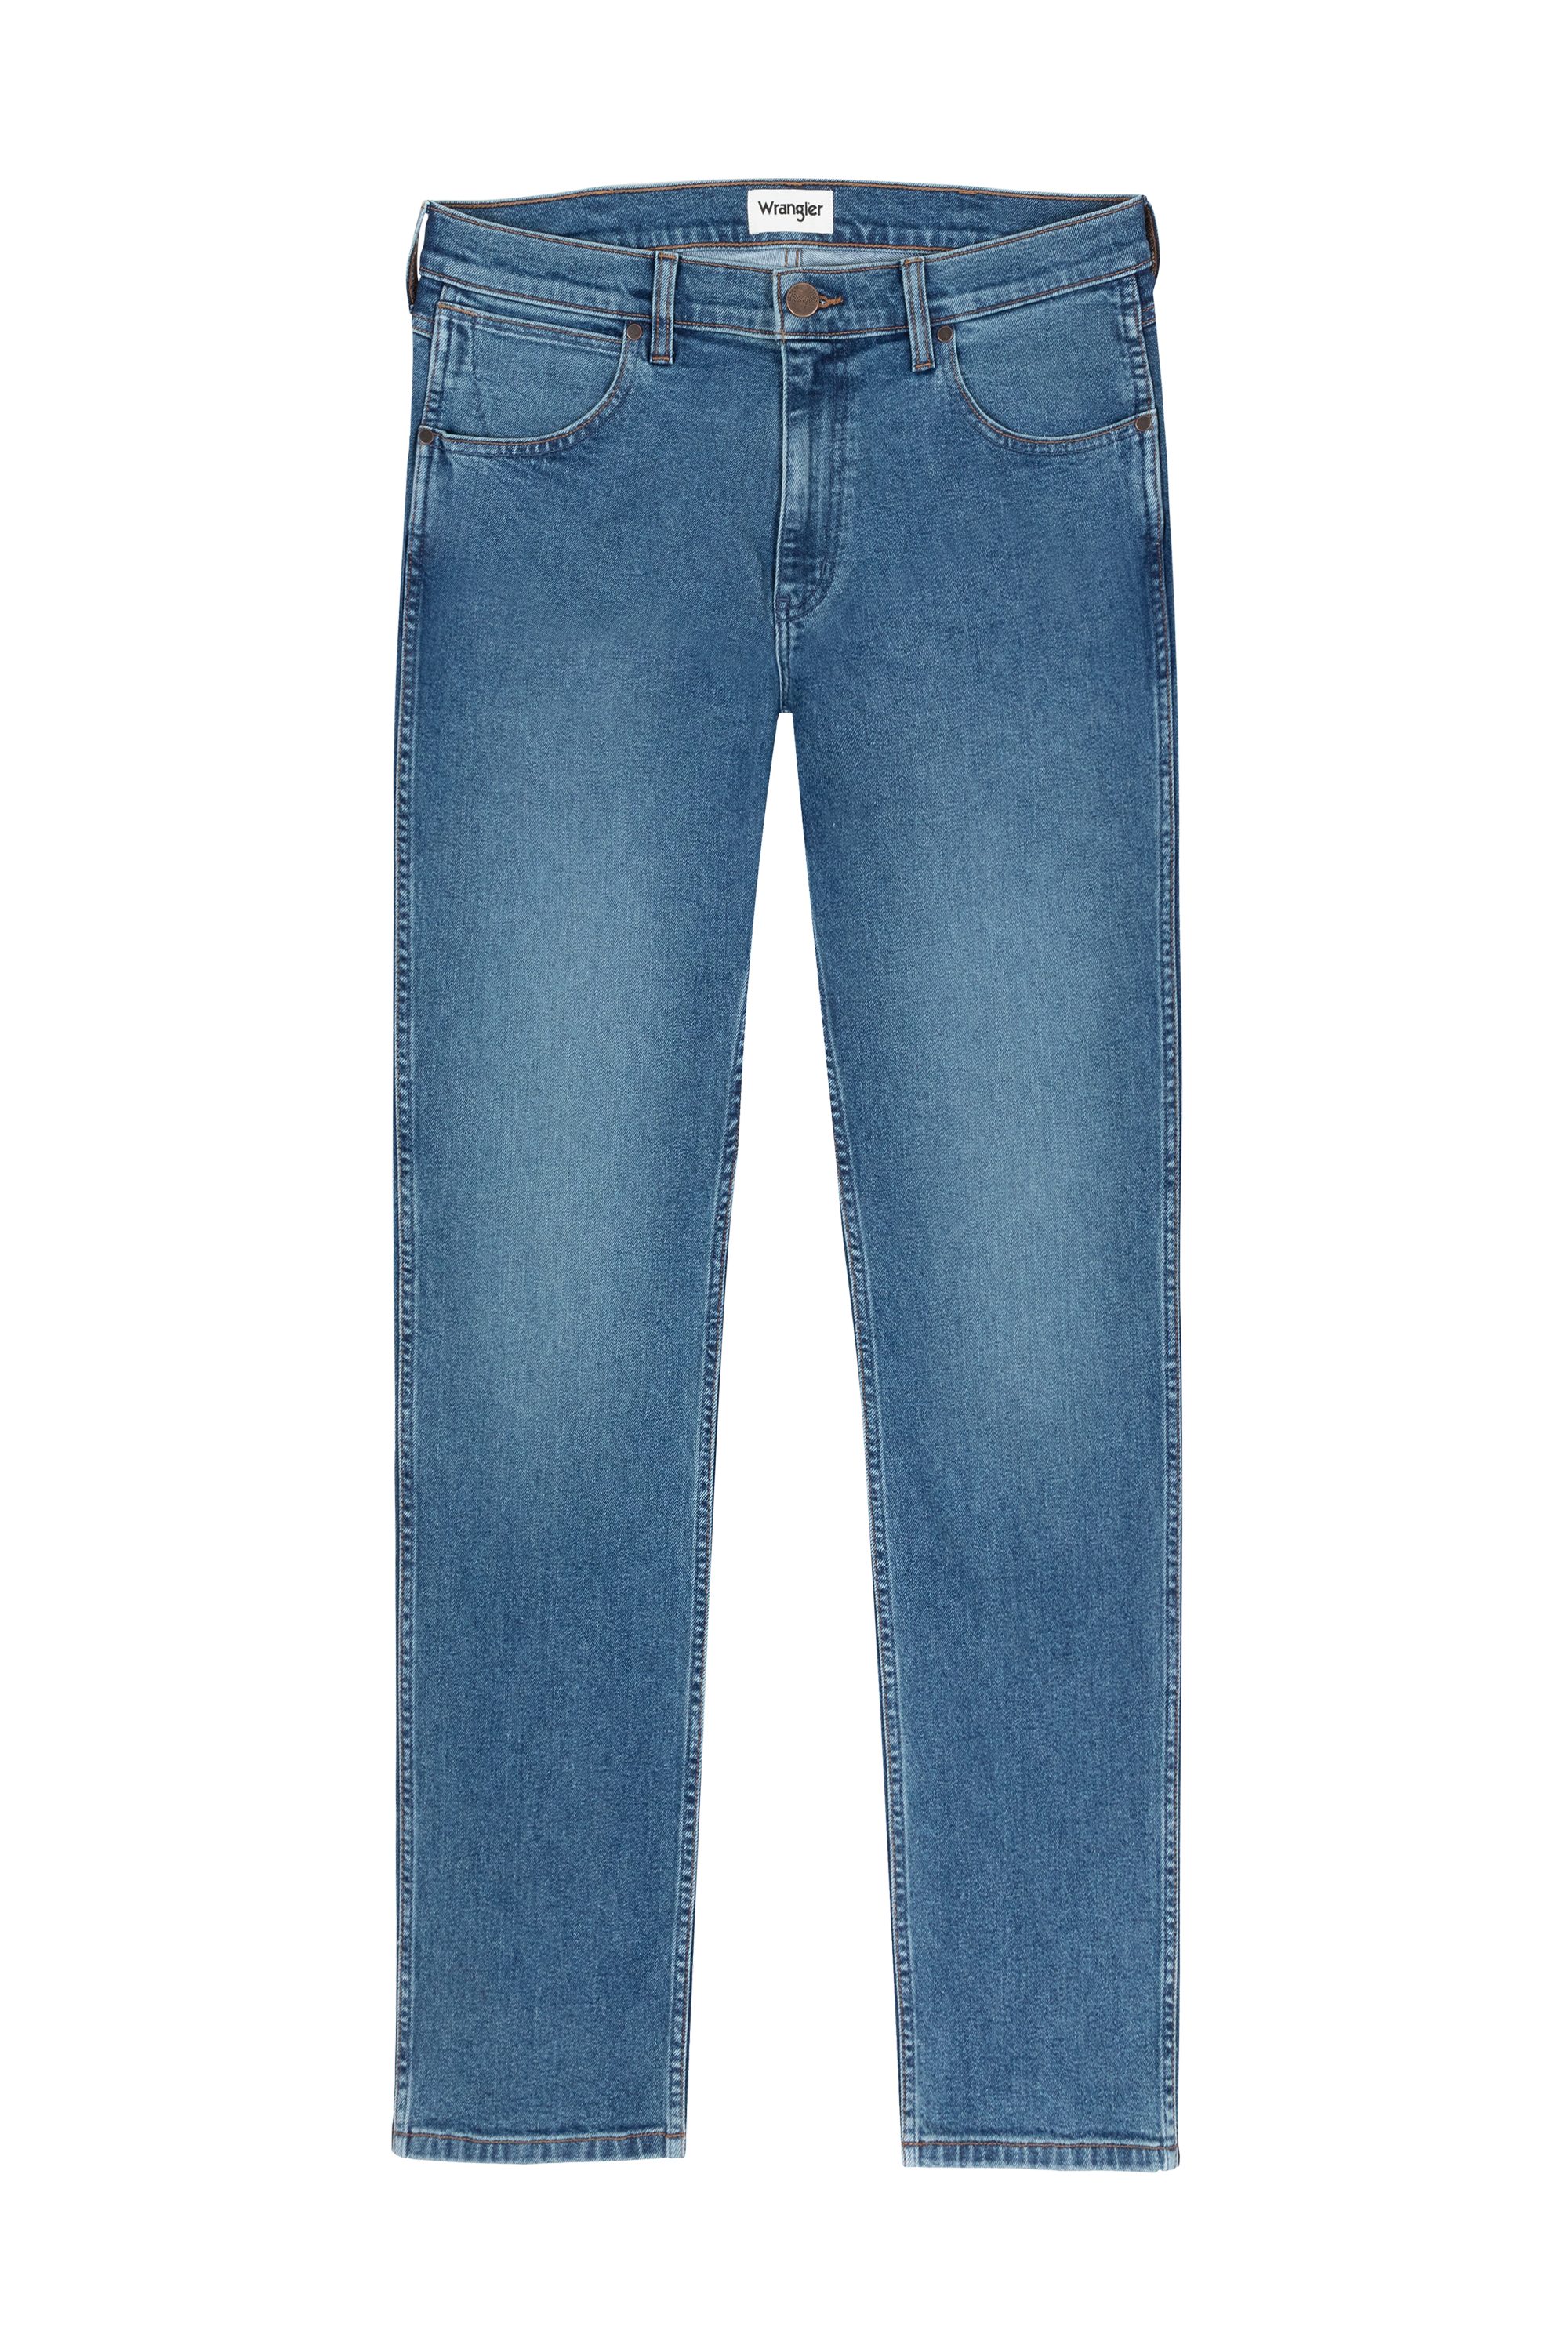 Wrangler 5-Pocket-Jeans WRANGLER GREENSBORO el nino W15QYLZ66 - COOLMAX